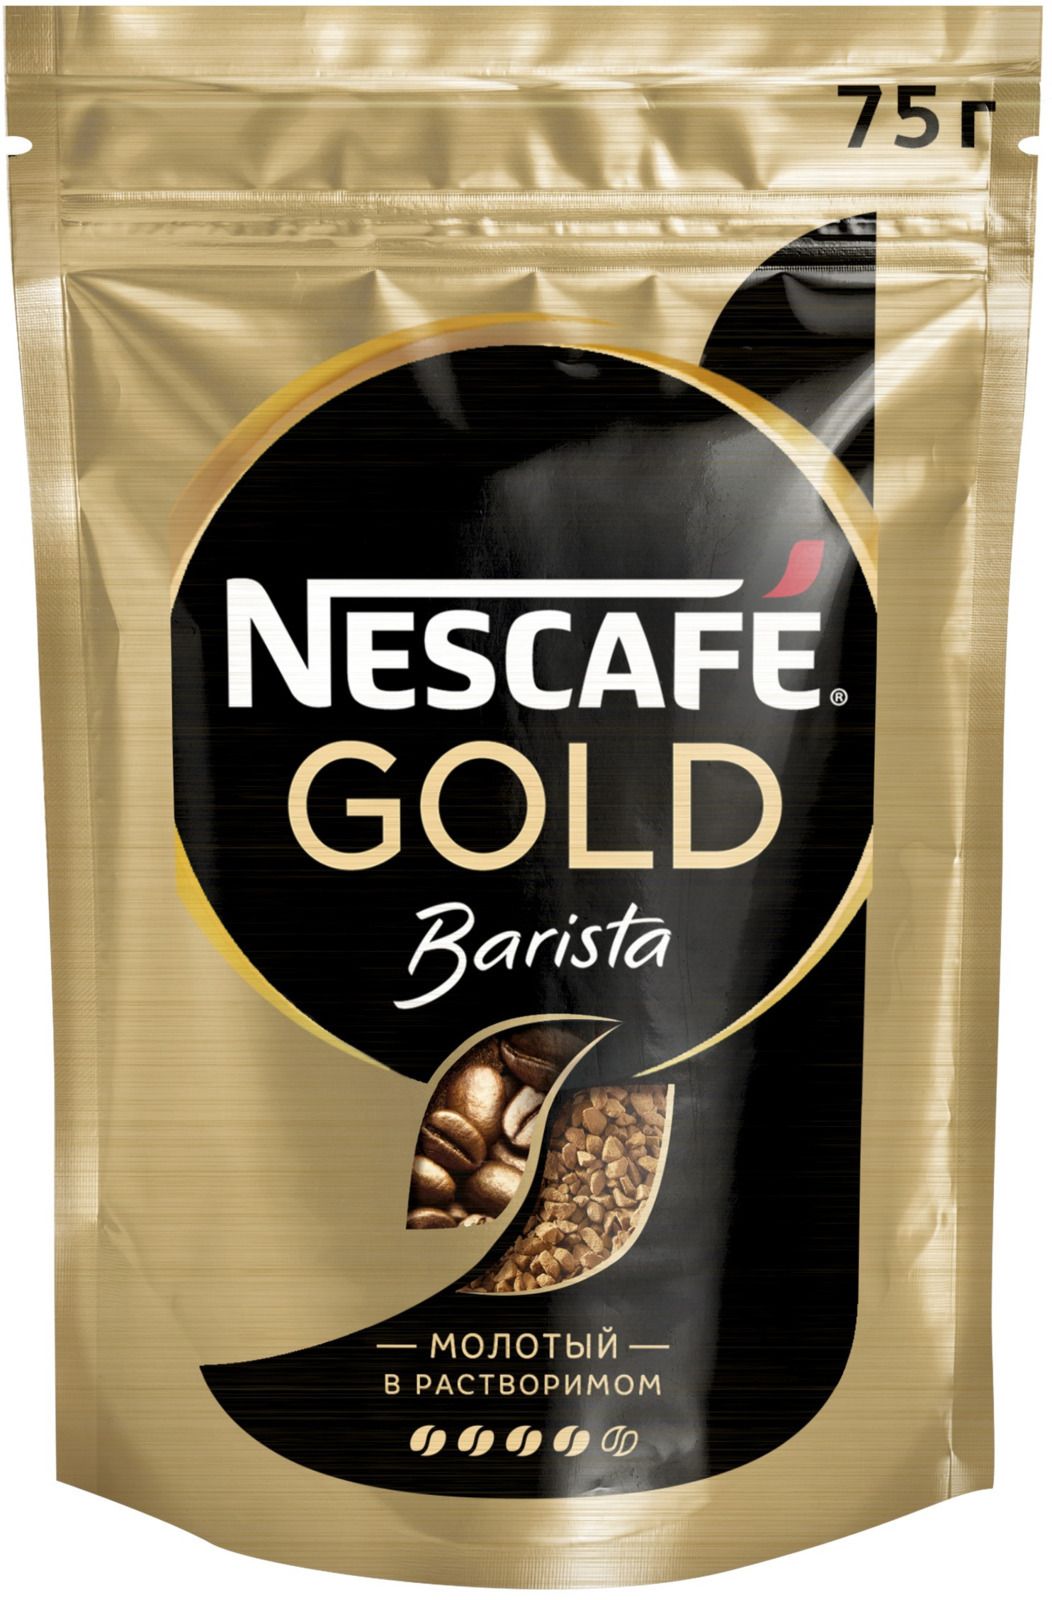 Nescafe Gold Barista         , 75 